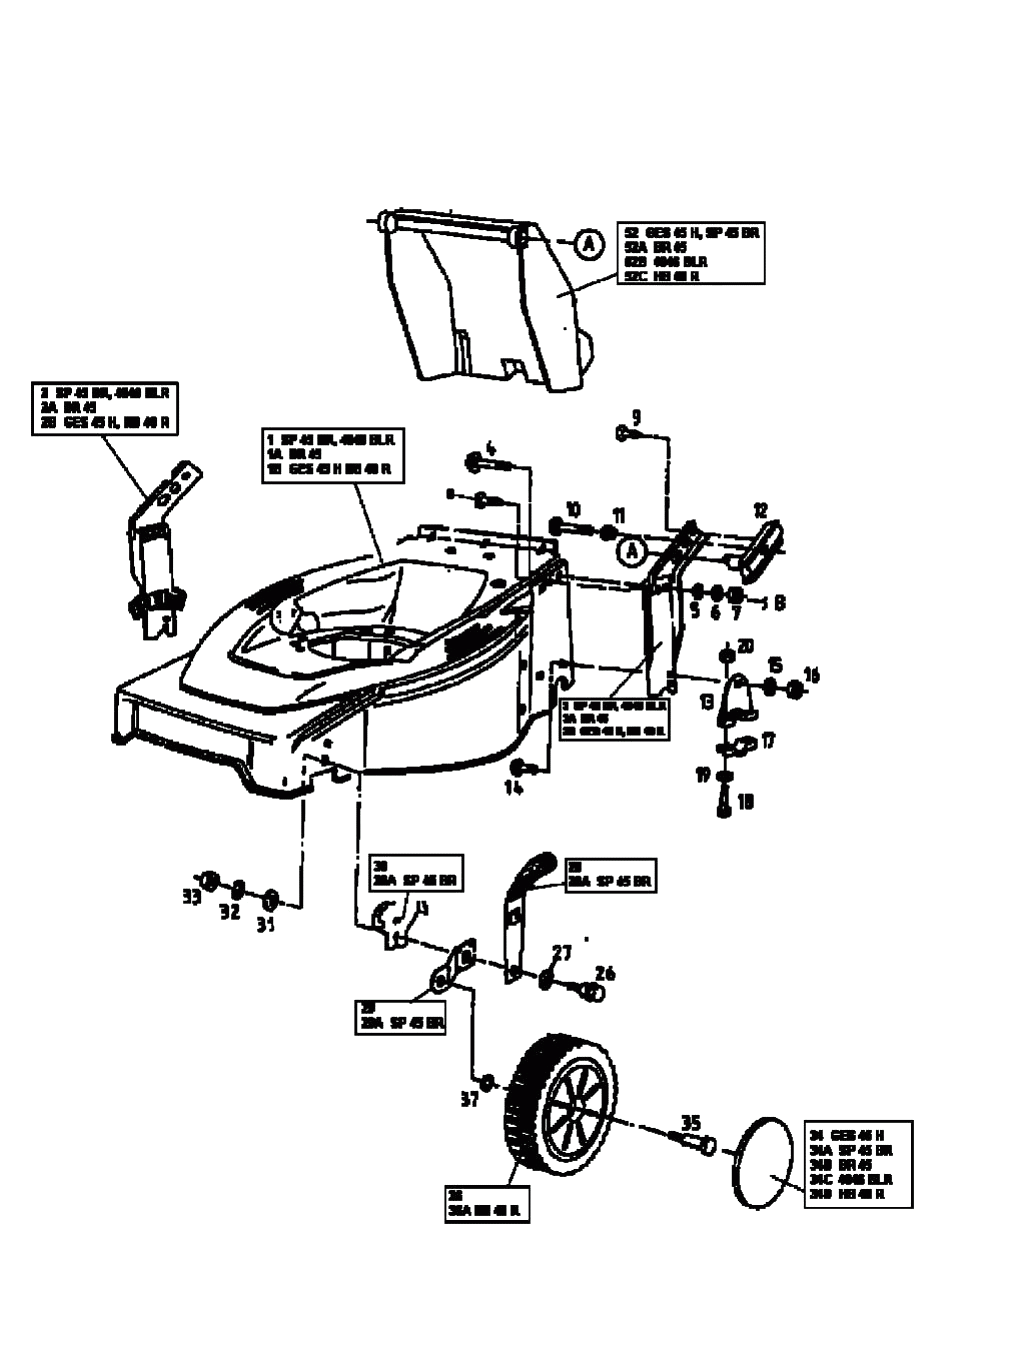 MTD Артикул 12A-T09Y678 (год выпуска 1999). Передние колеса, регулятор высоты реза